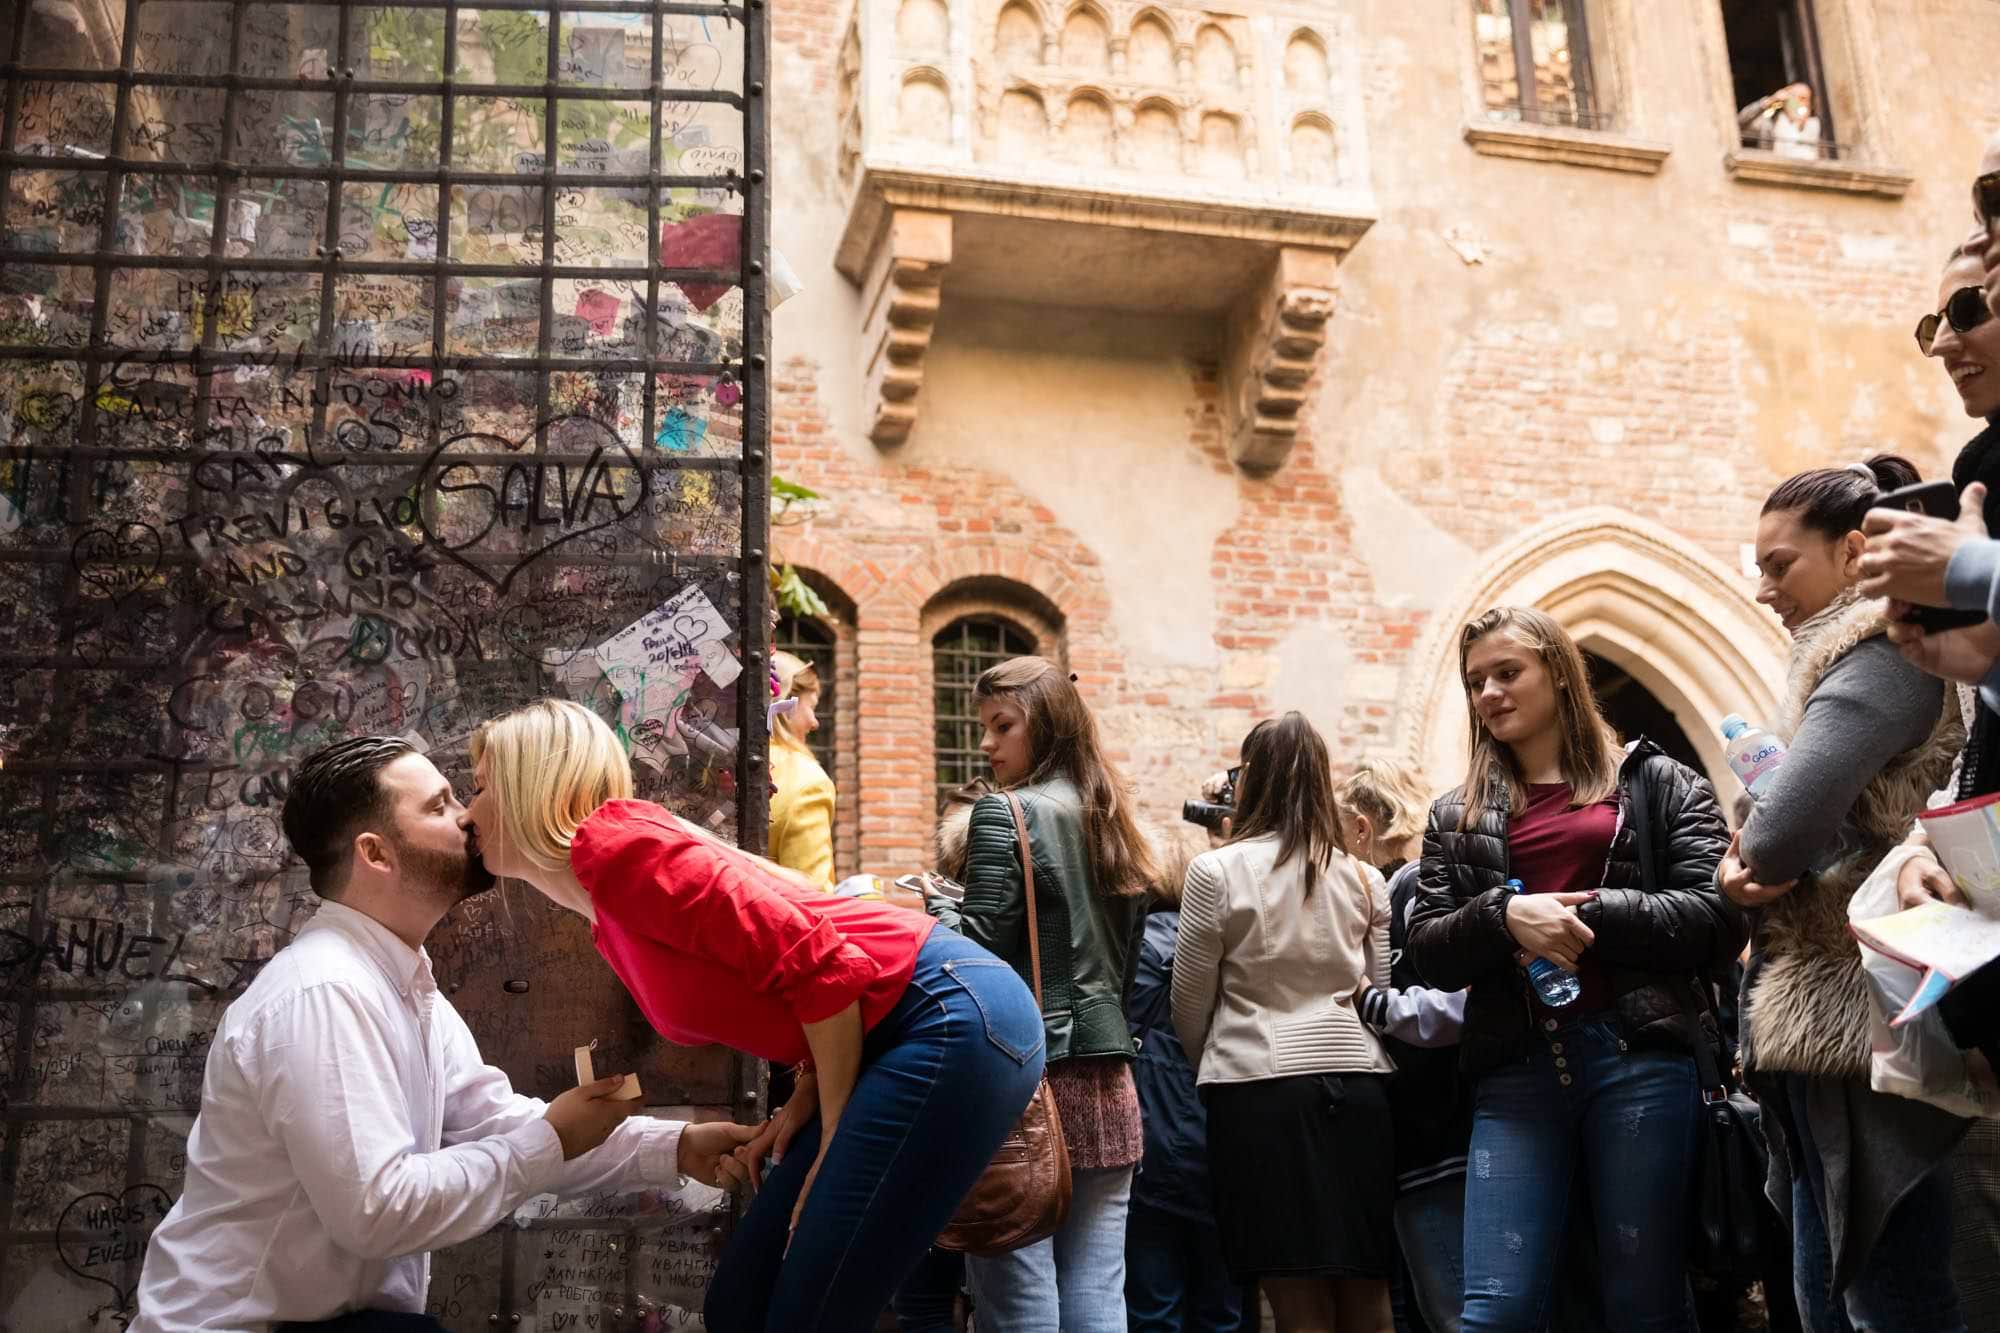 A romantic marriage proposal under the Romeo and Juliet balcony at Casa di Giulietta in Verona, Italy